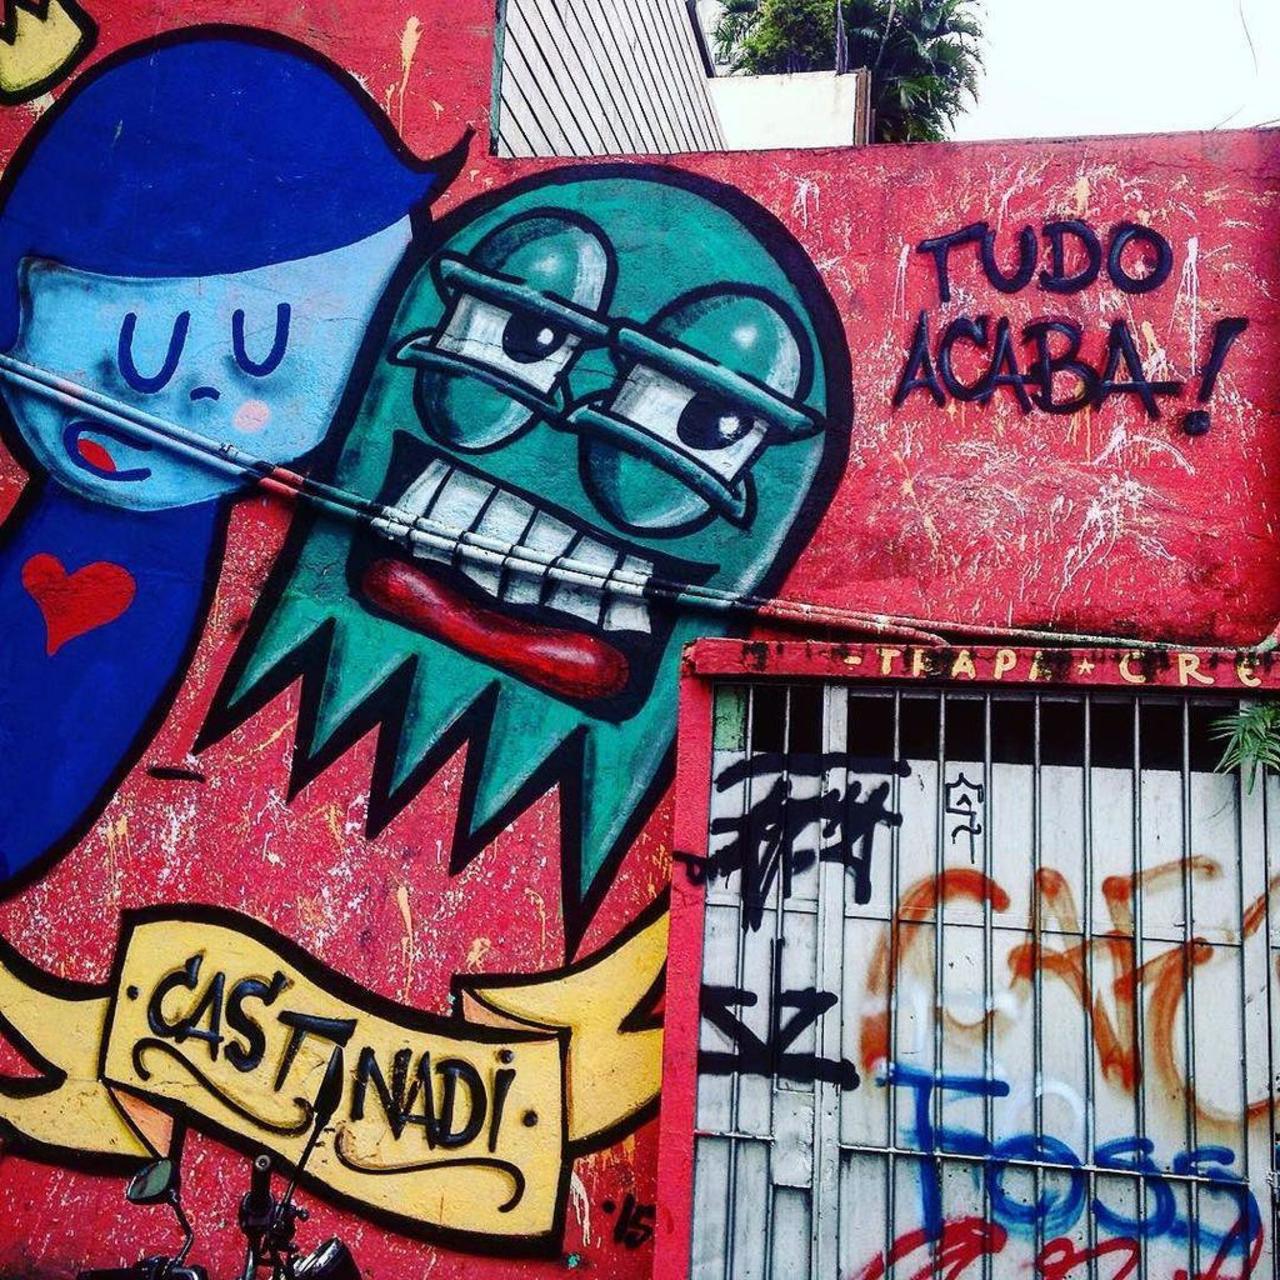 Até o muro é passageiro. 
#streetartrio #streetart #grafite #graffiti by vivsy http://t.co/TmAQEjXQbw